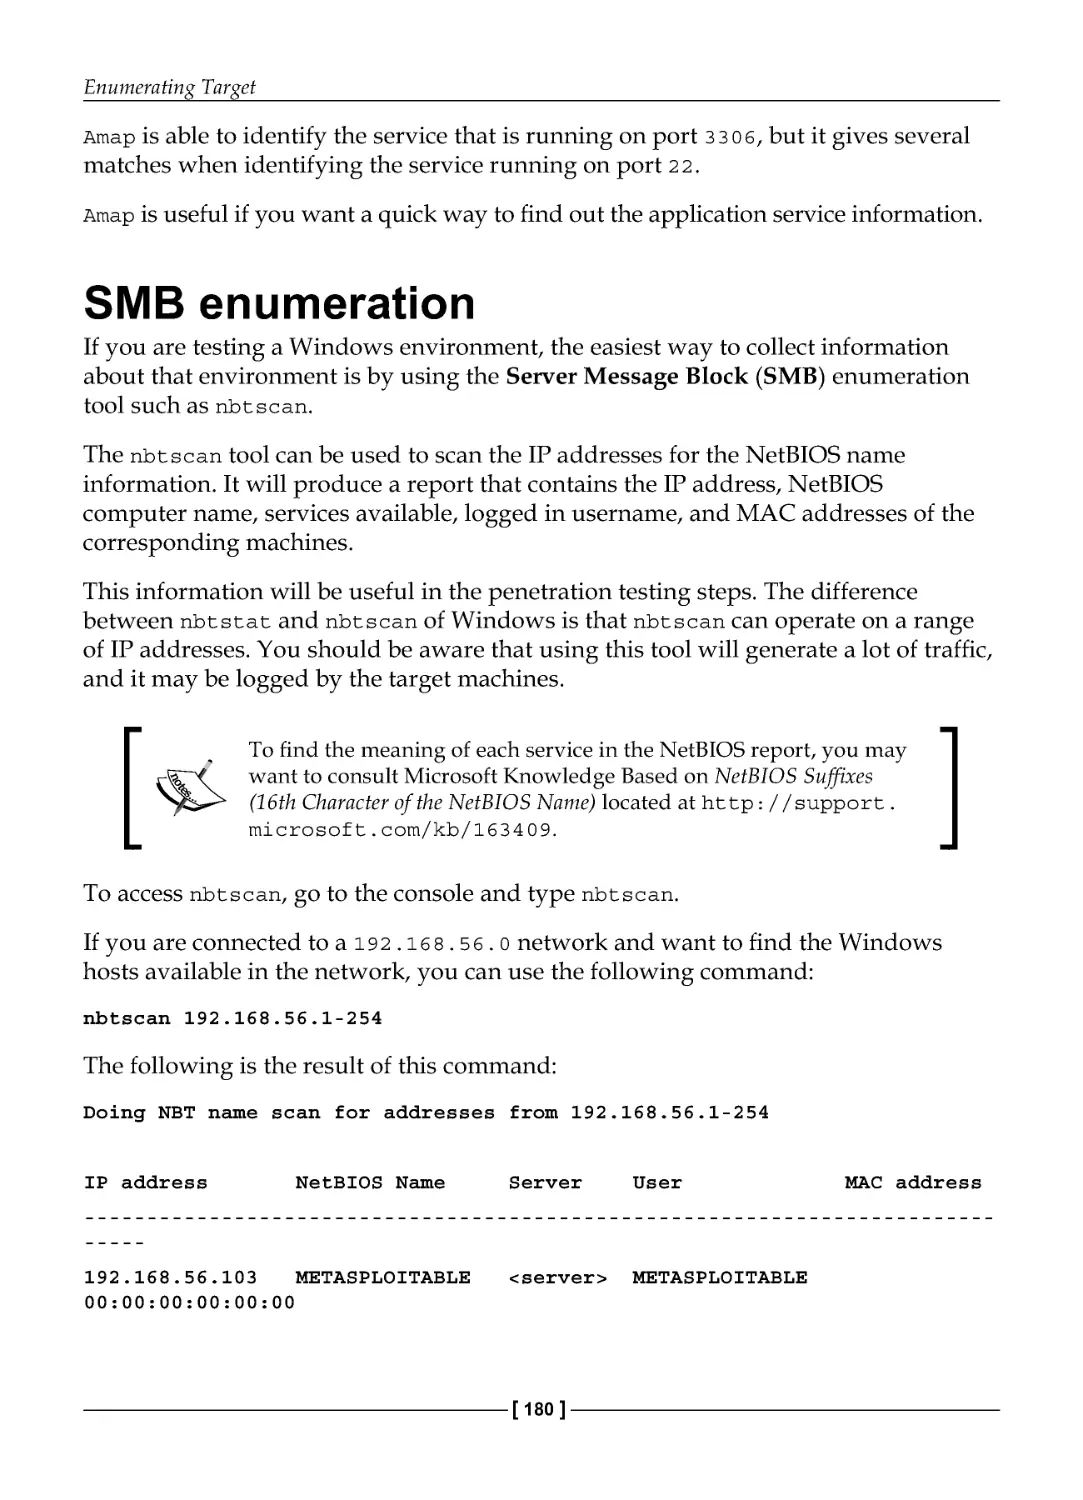 SMB enumeration